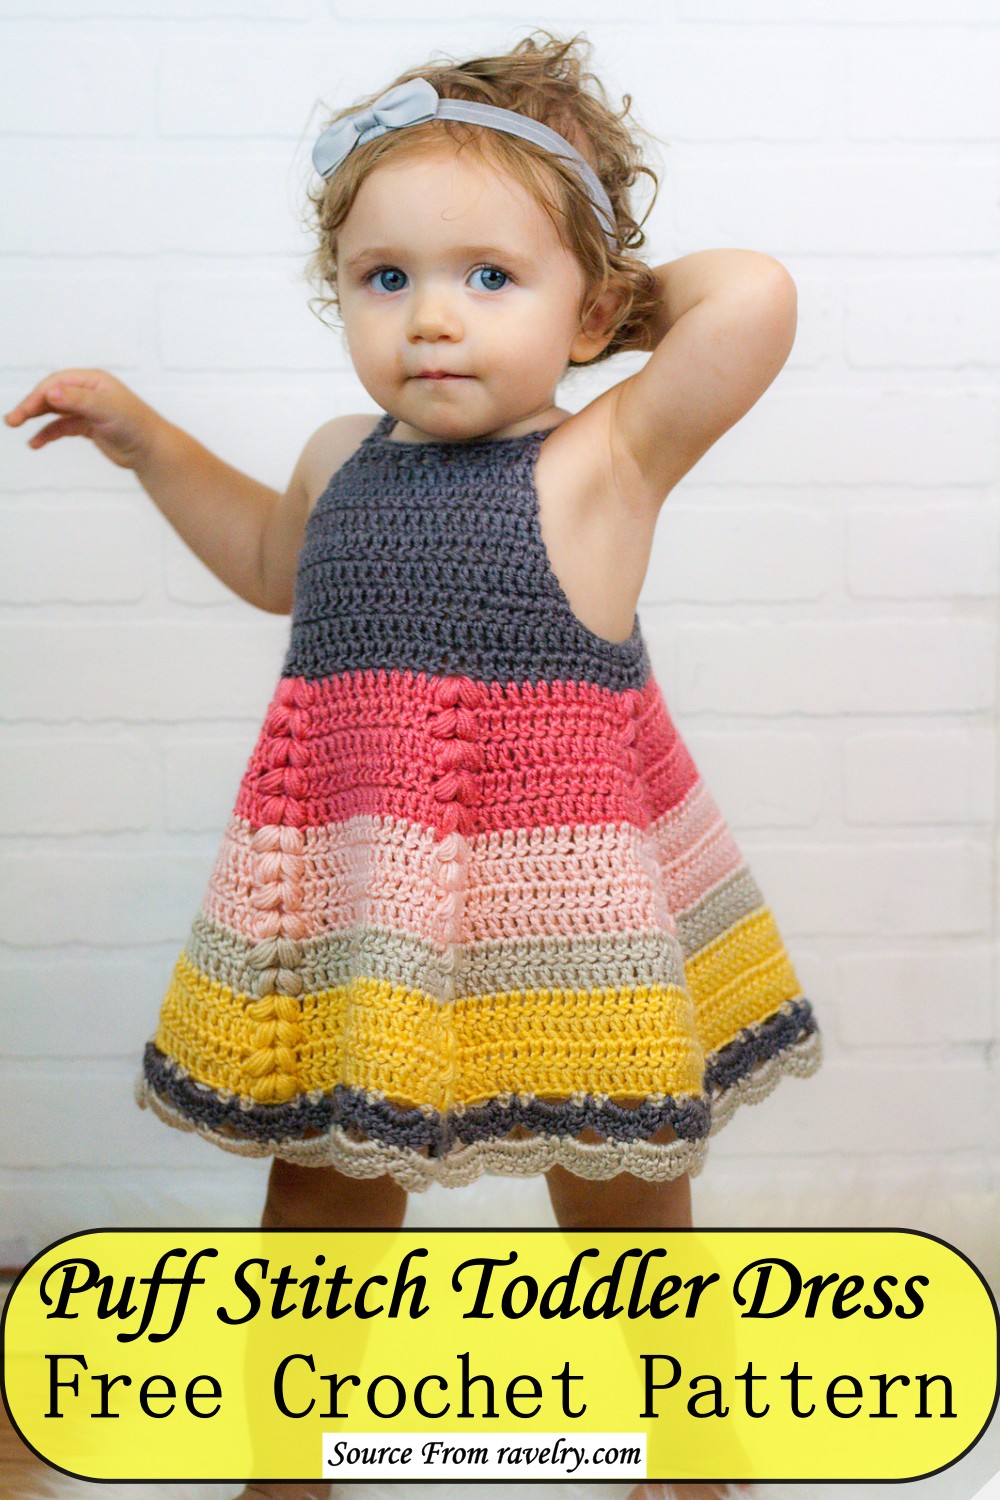 Puff Stitch Toddler Dress